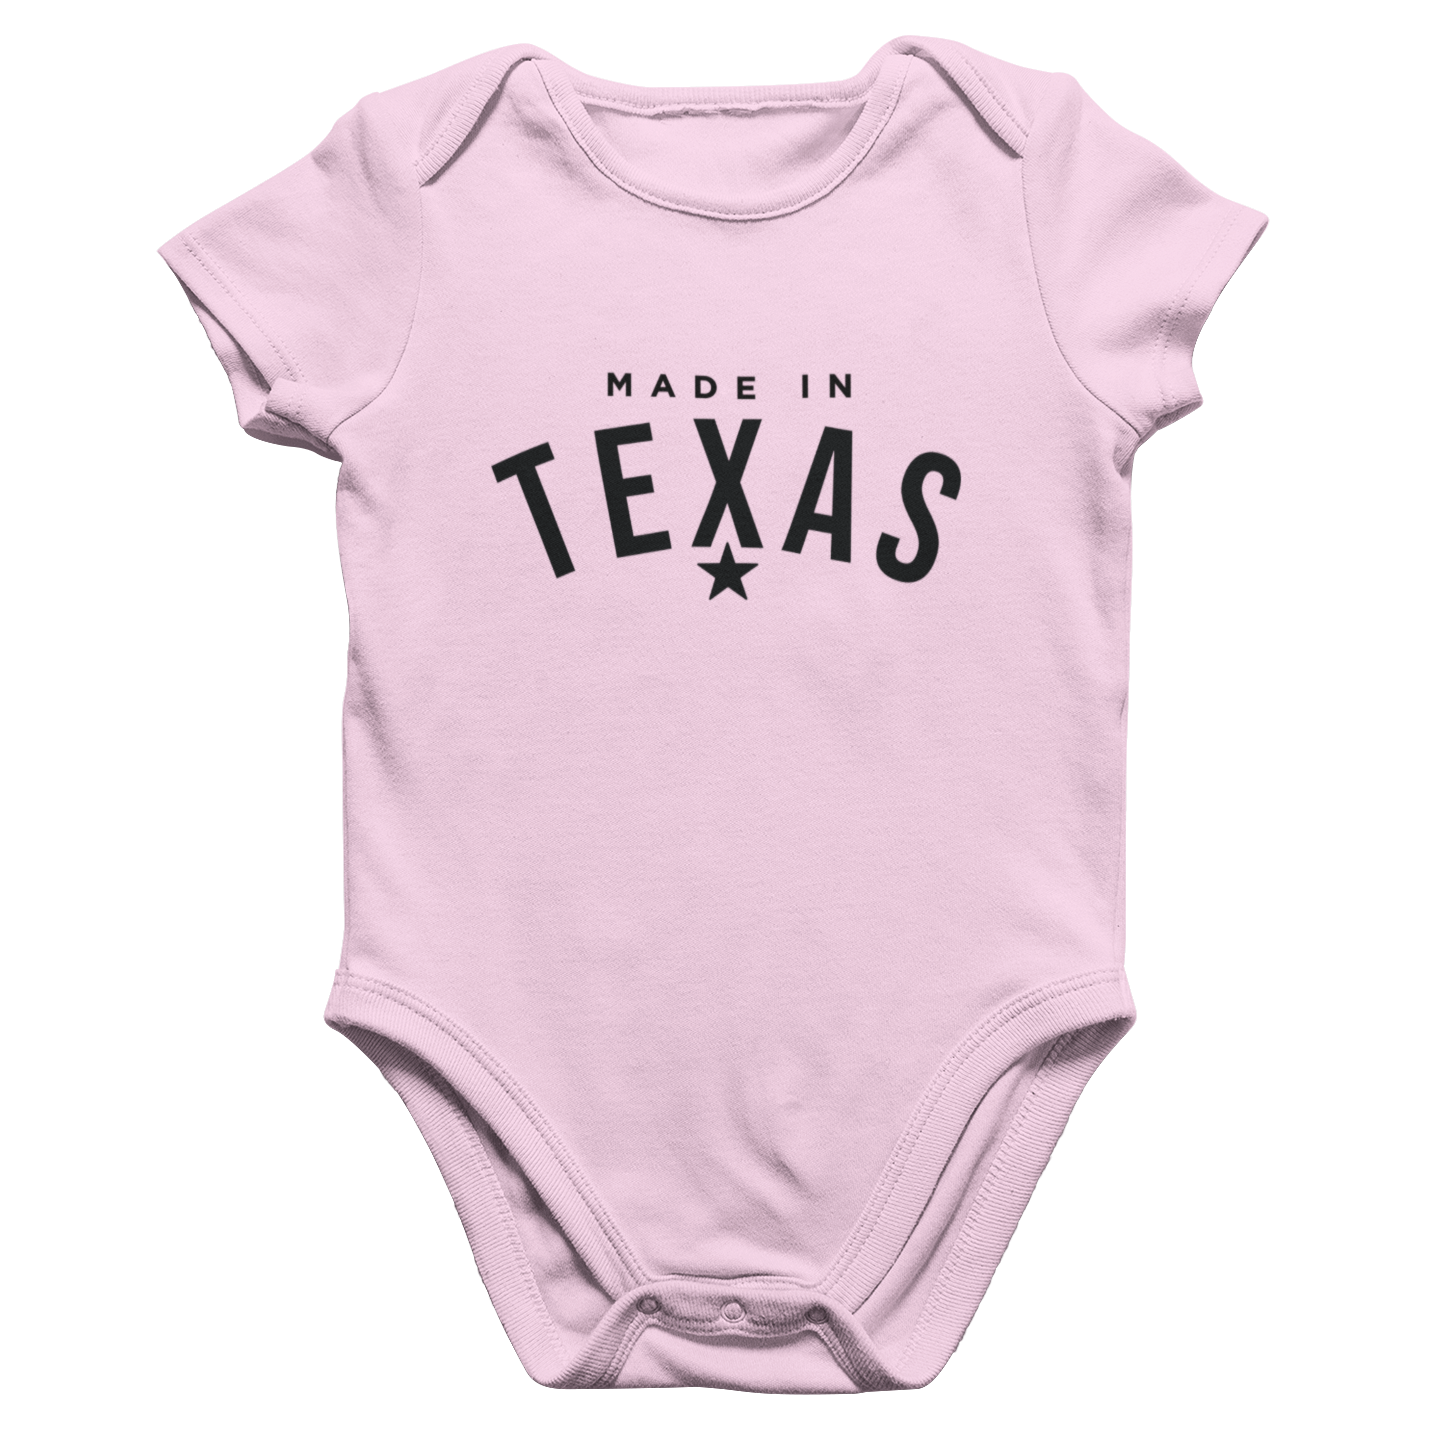 Made in Texas Onesie - Pink